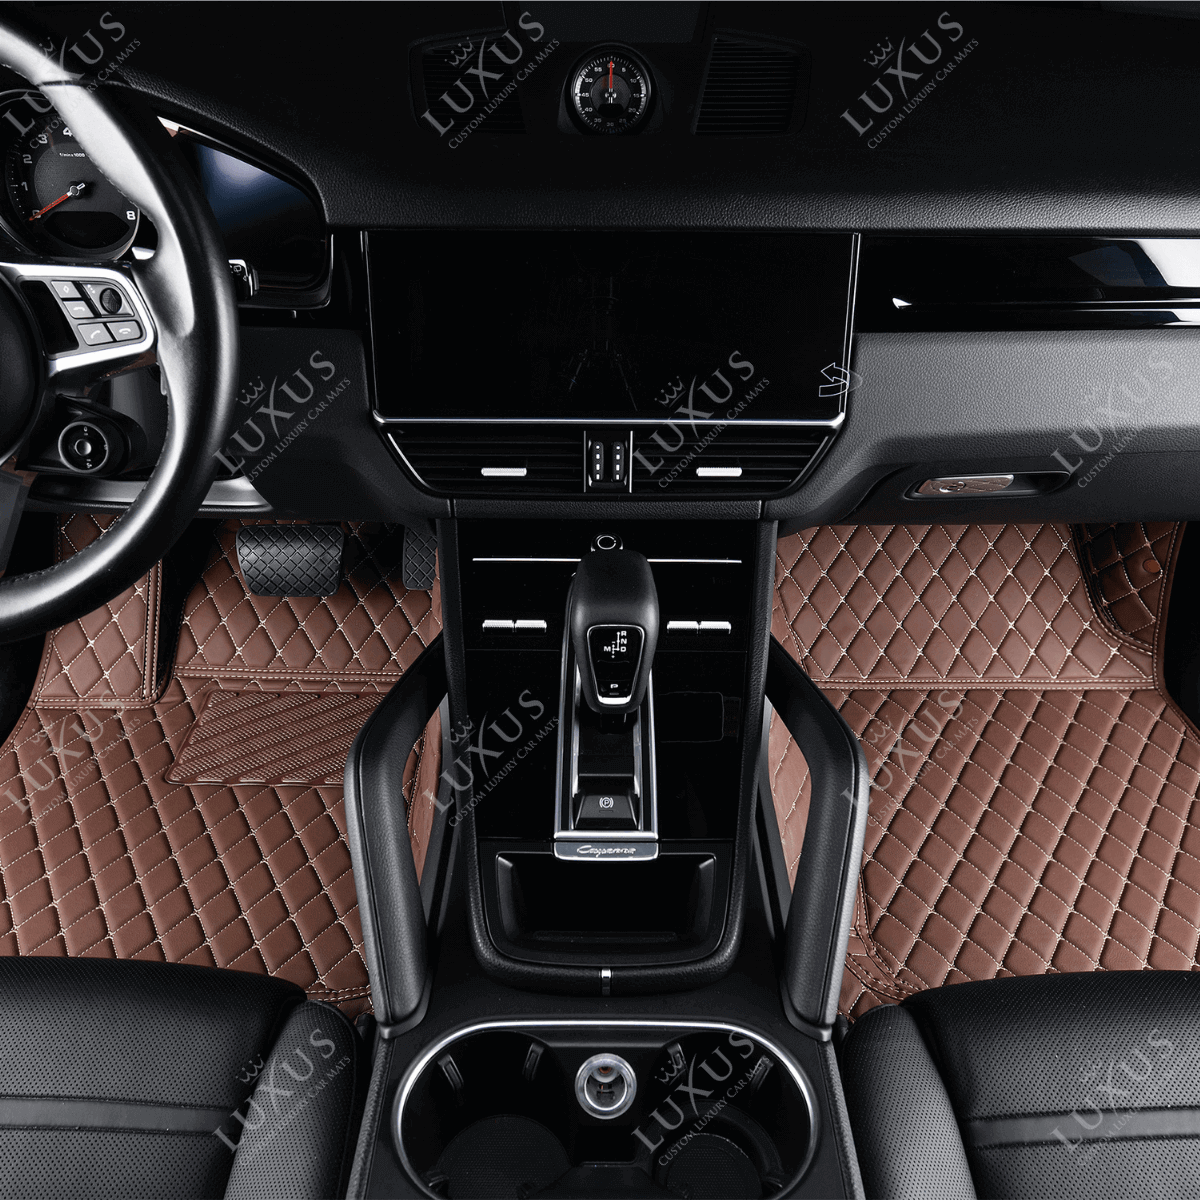 Dark Brown Luxury Custom Car Mats – Witamats